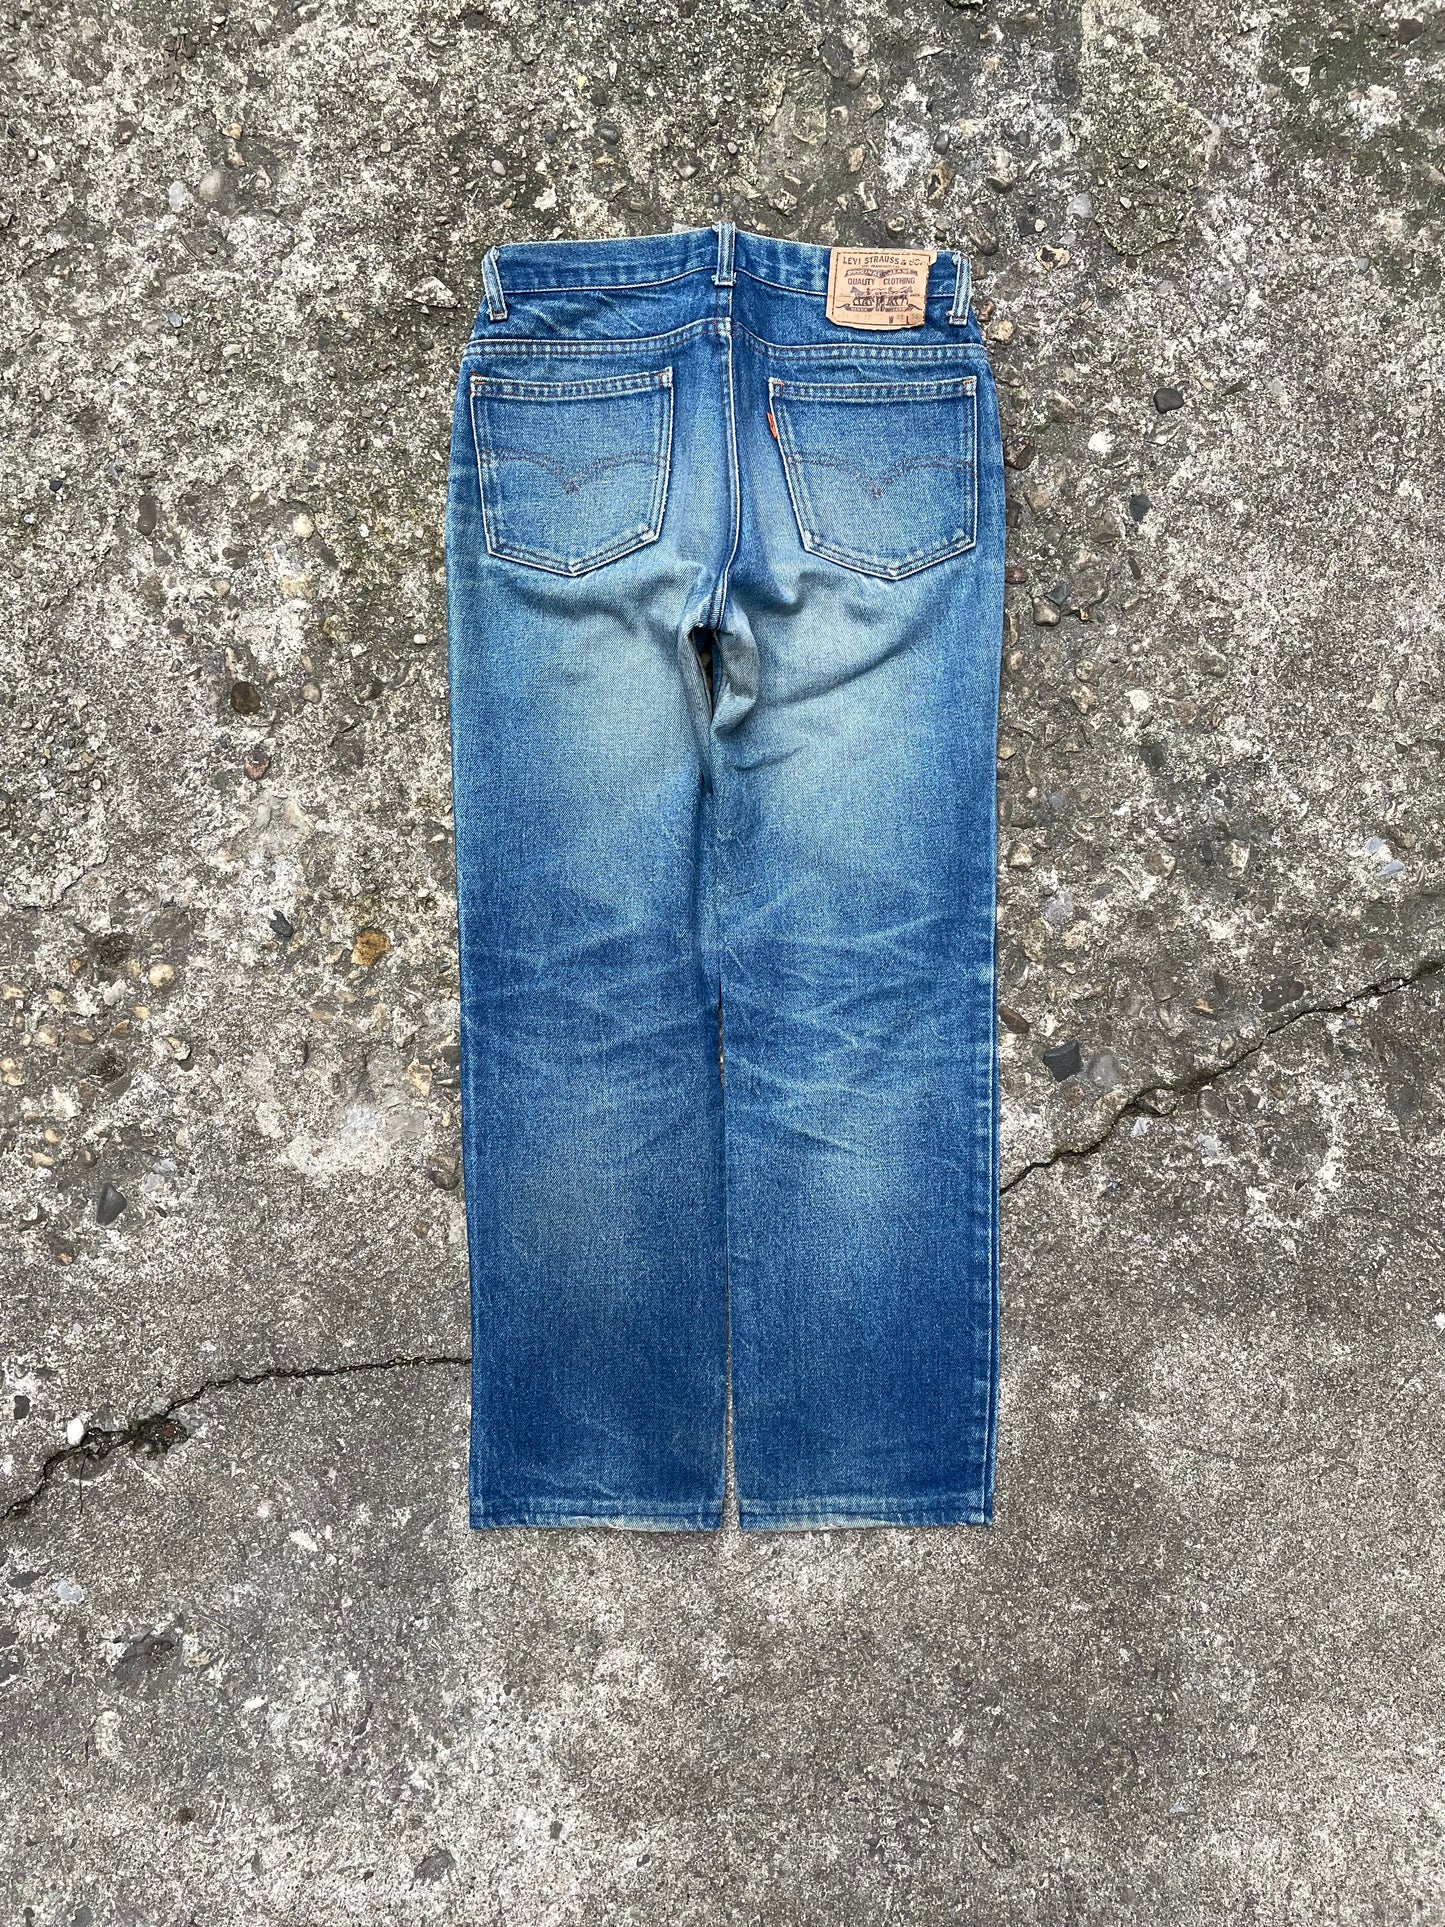 1980's Levi's 631 Orange Tab Denim Jeans - 32